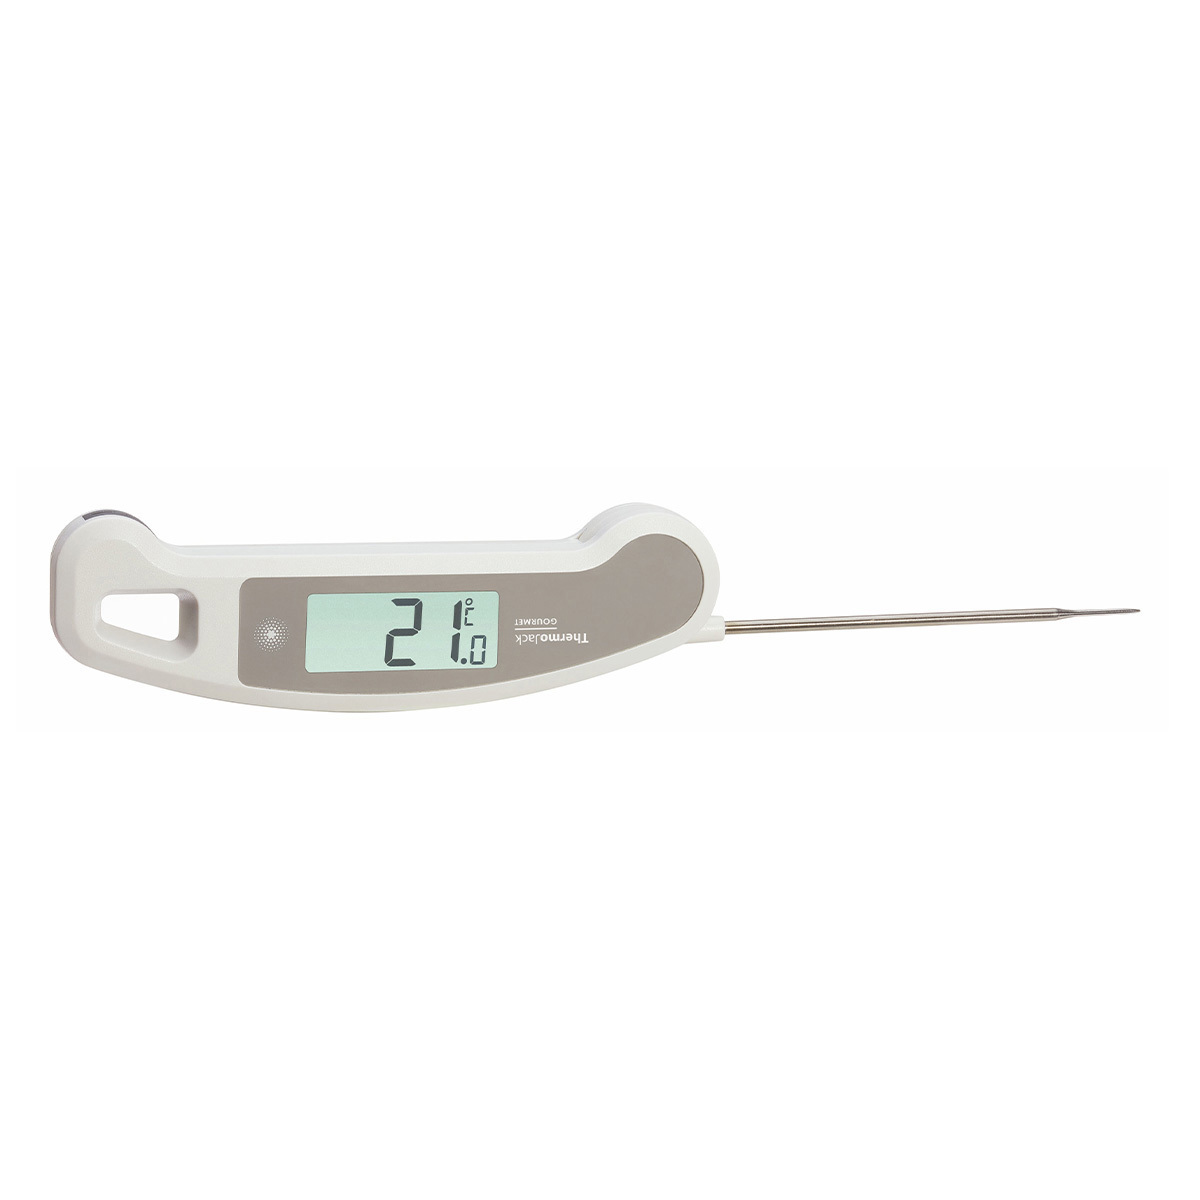 30-1060-02-profi-küchenthermometer-thermo-jack-gourmet-ansicht-1200x1200px.jpg